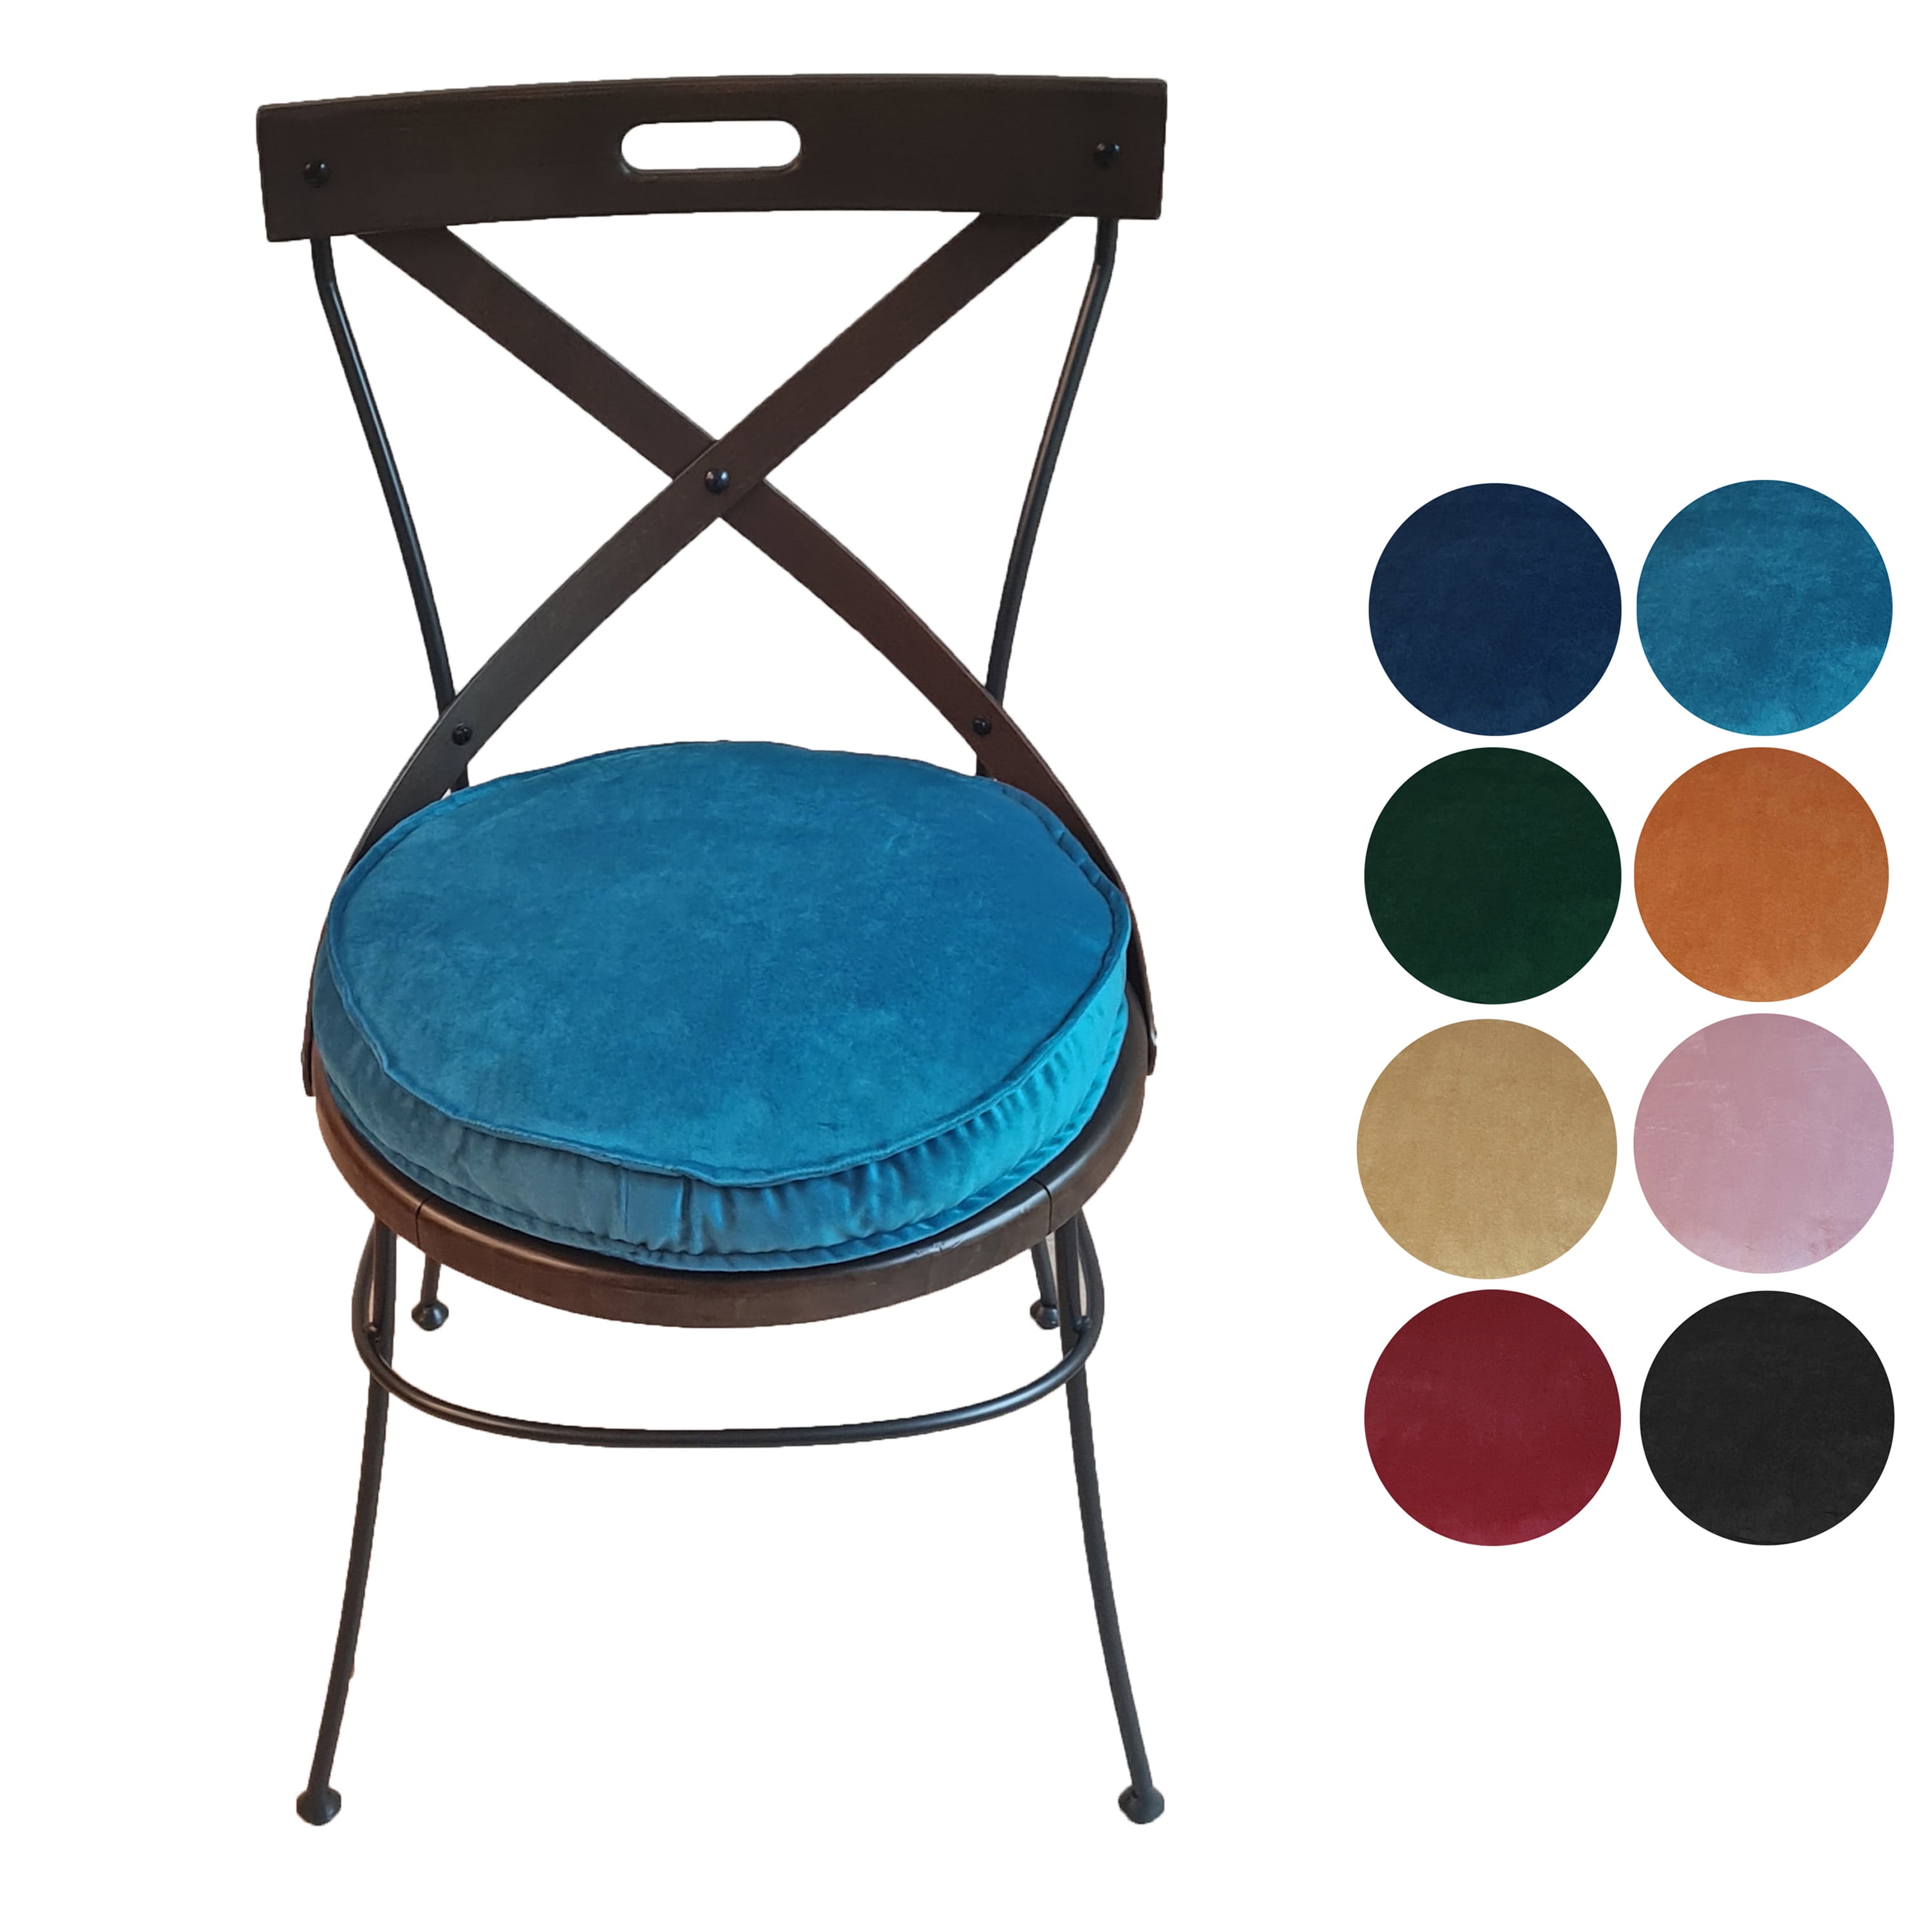 Bistro Chair Cushion - Rave Graphite Grey - 16 Round Chair Pad